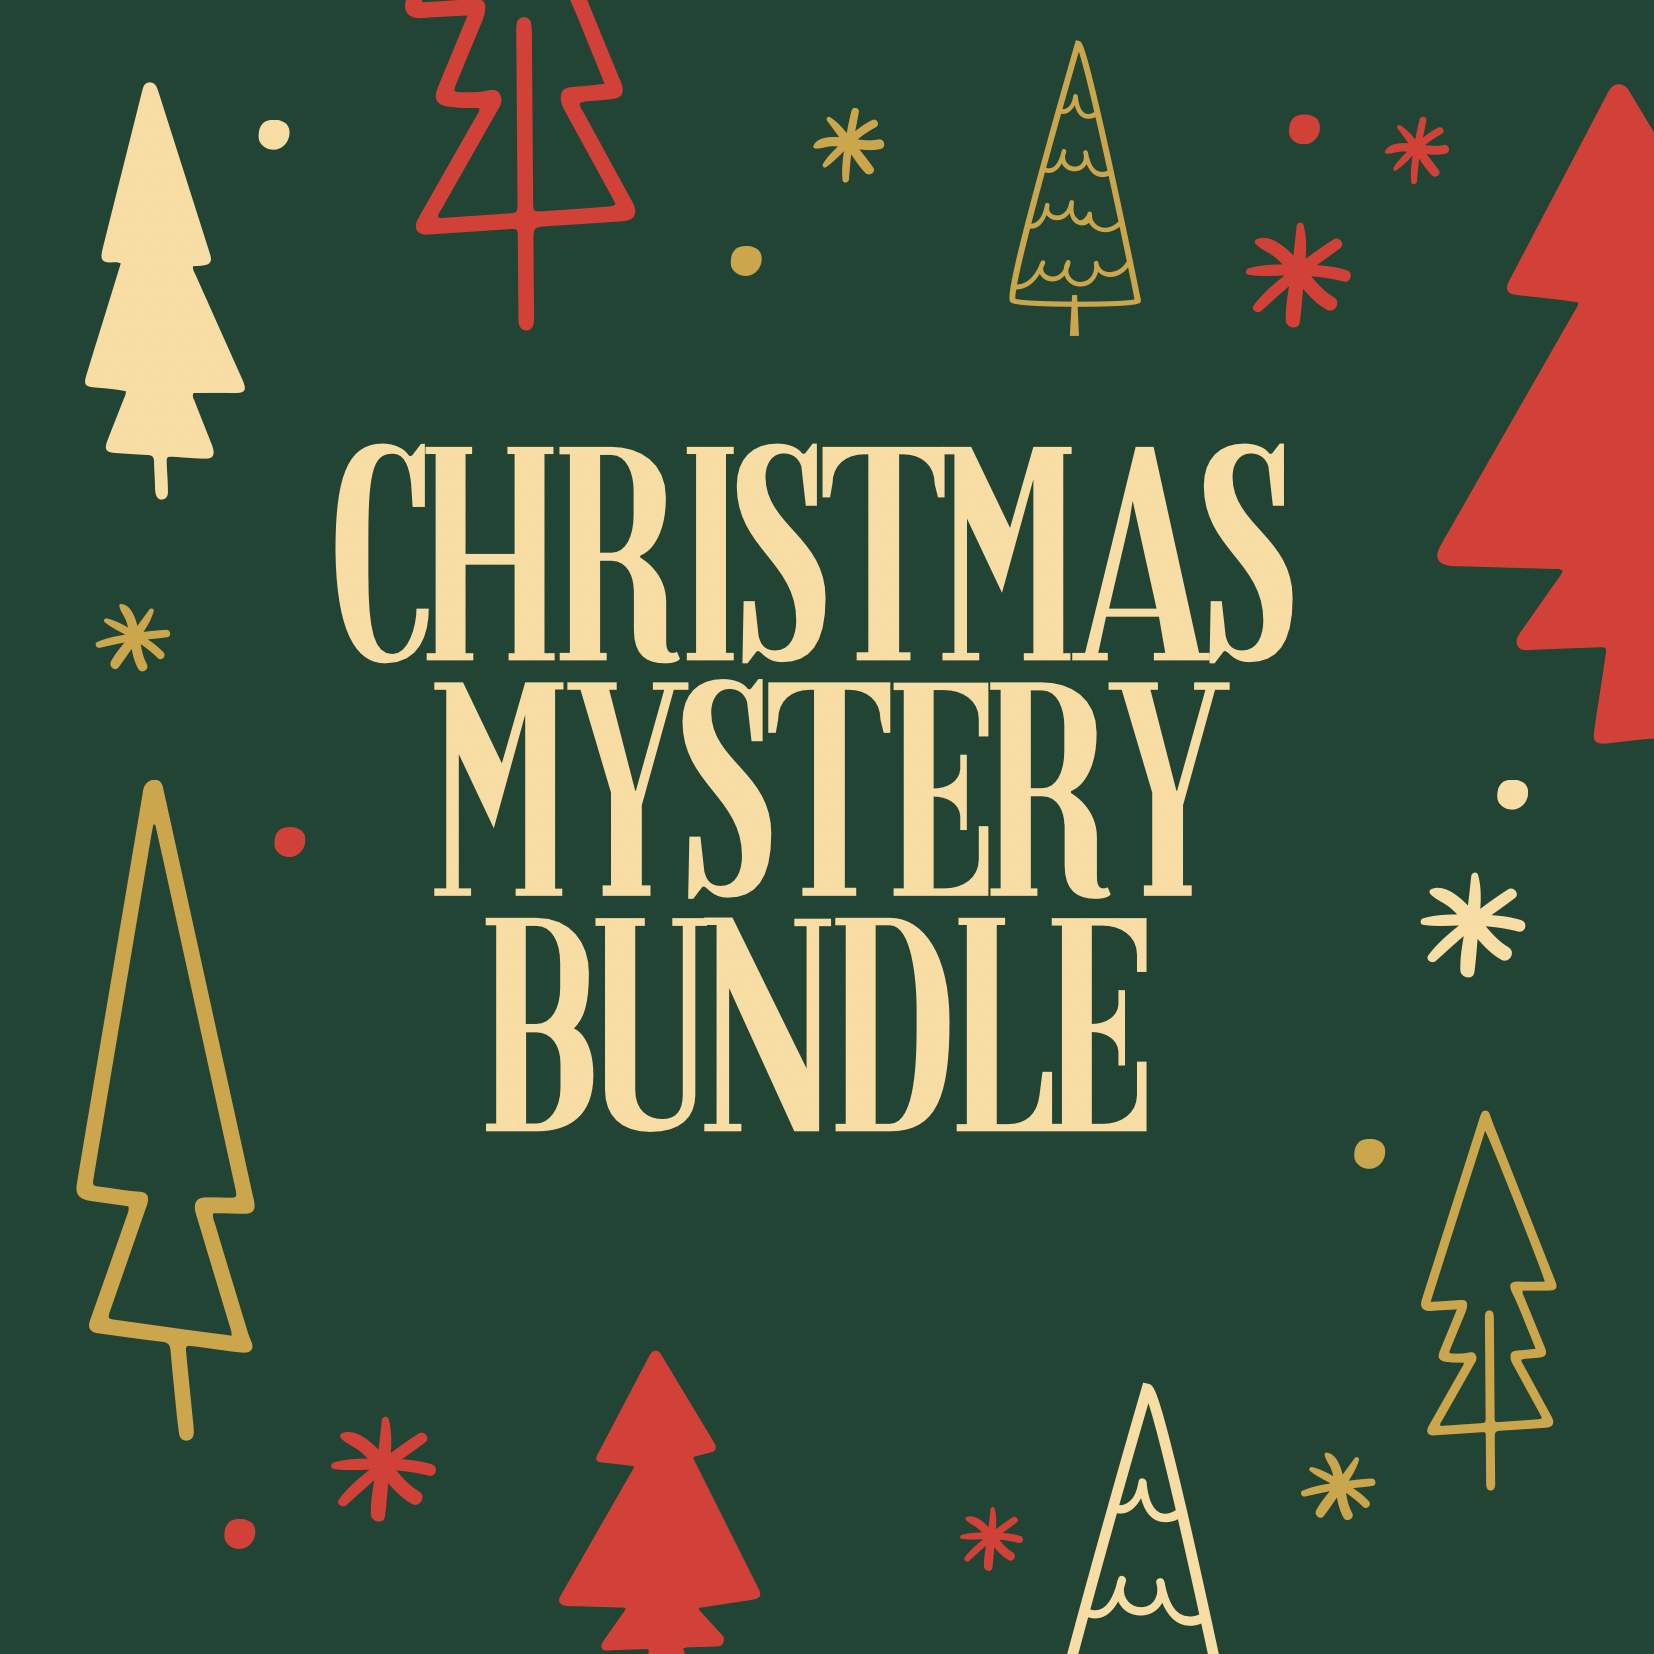 Christmas mystery bundle $100